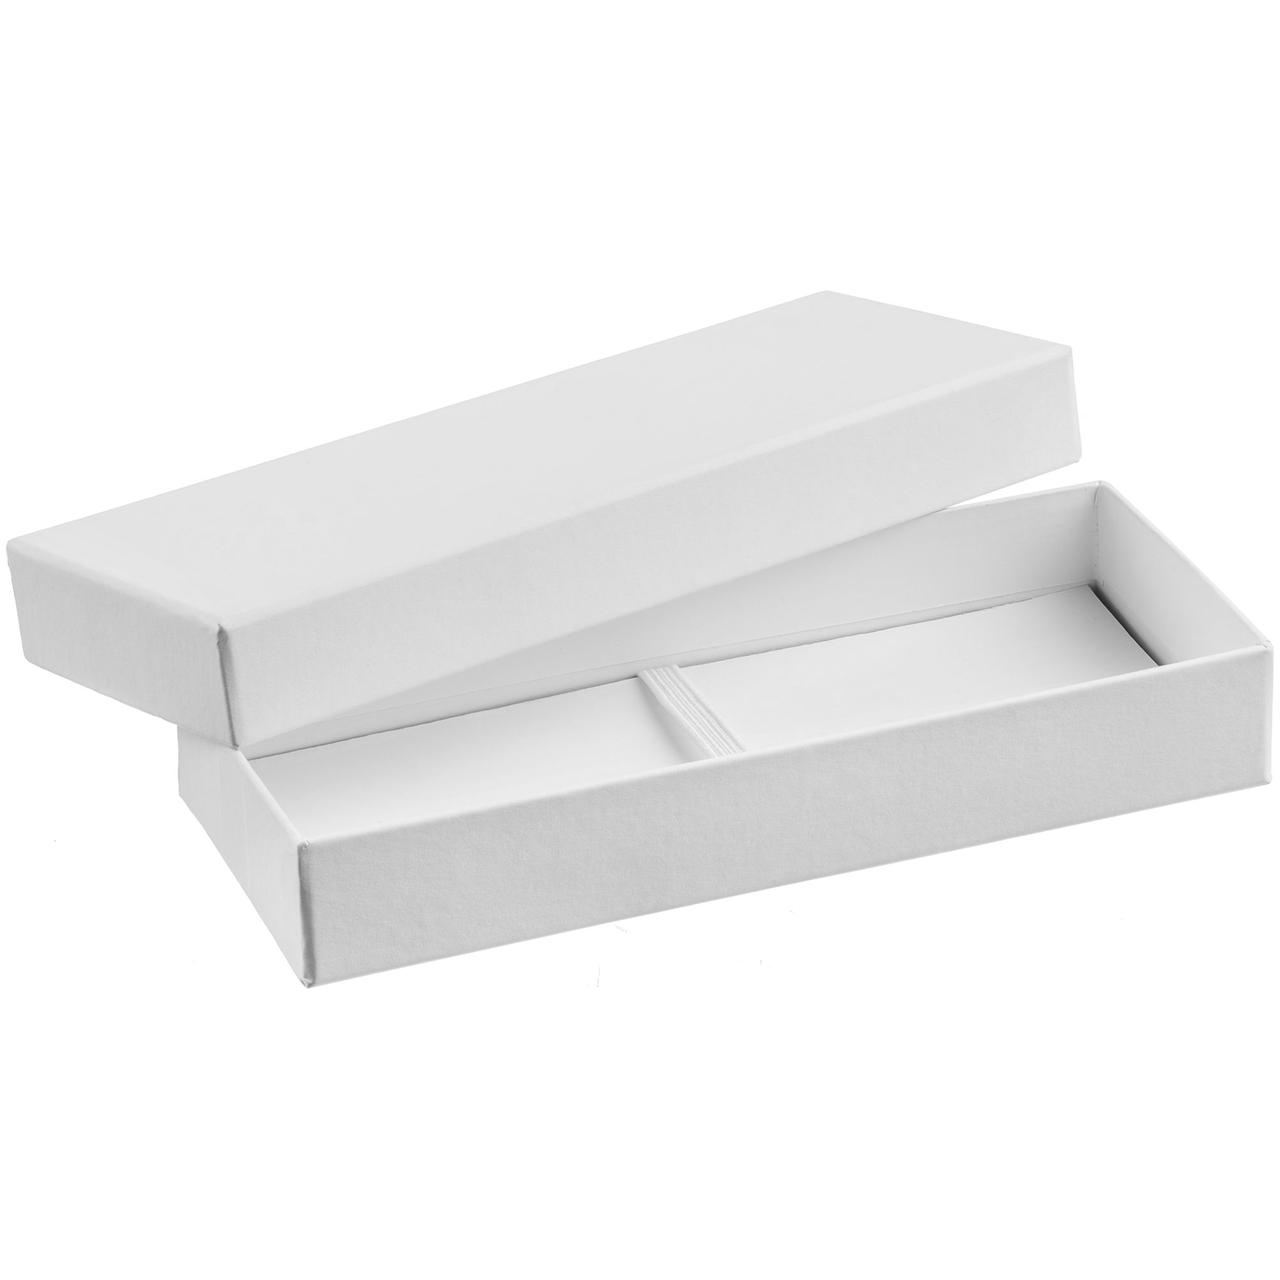 Коробка Tackle, белая (артикул 7956.60)